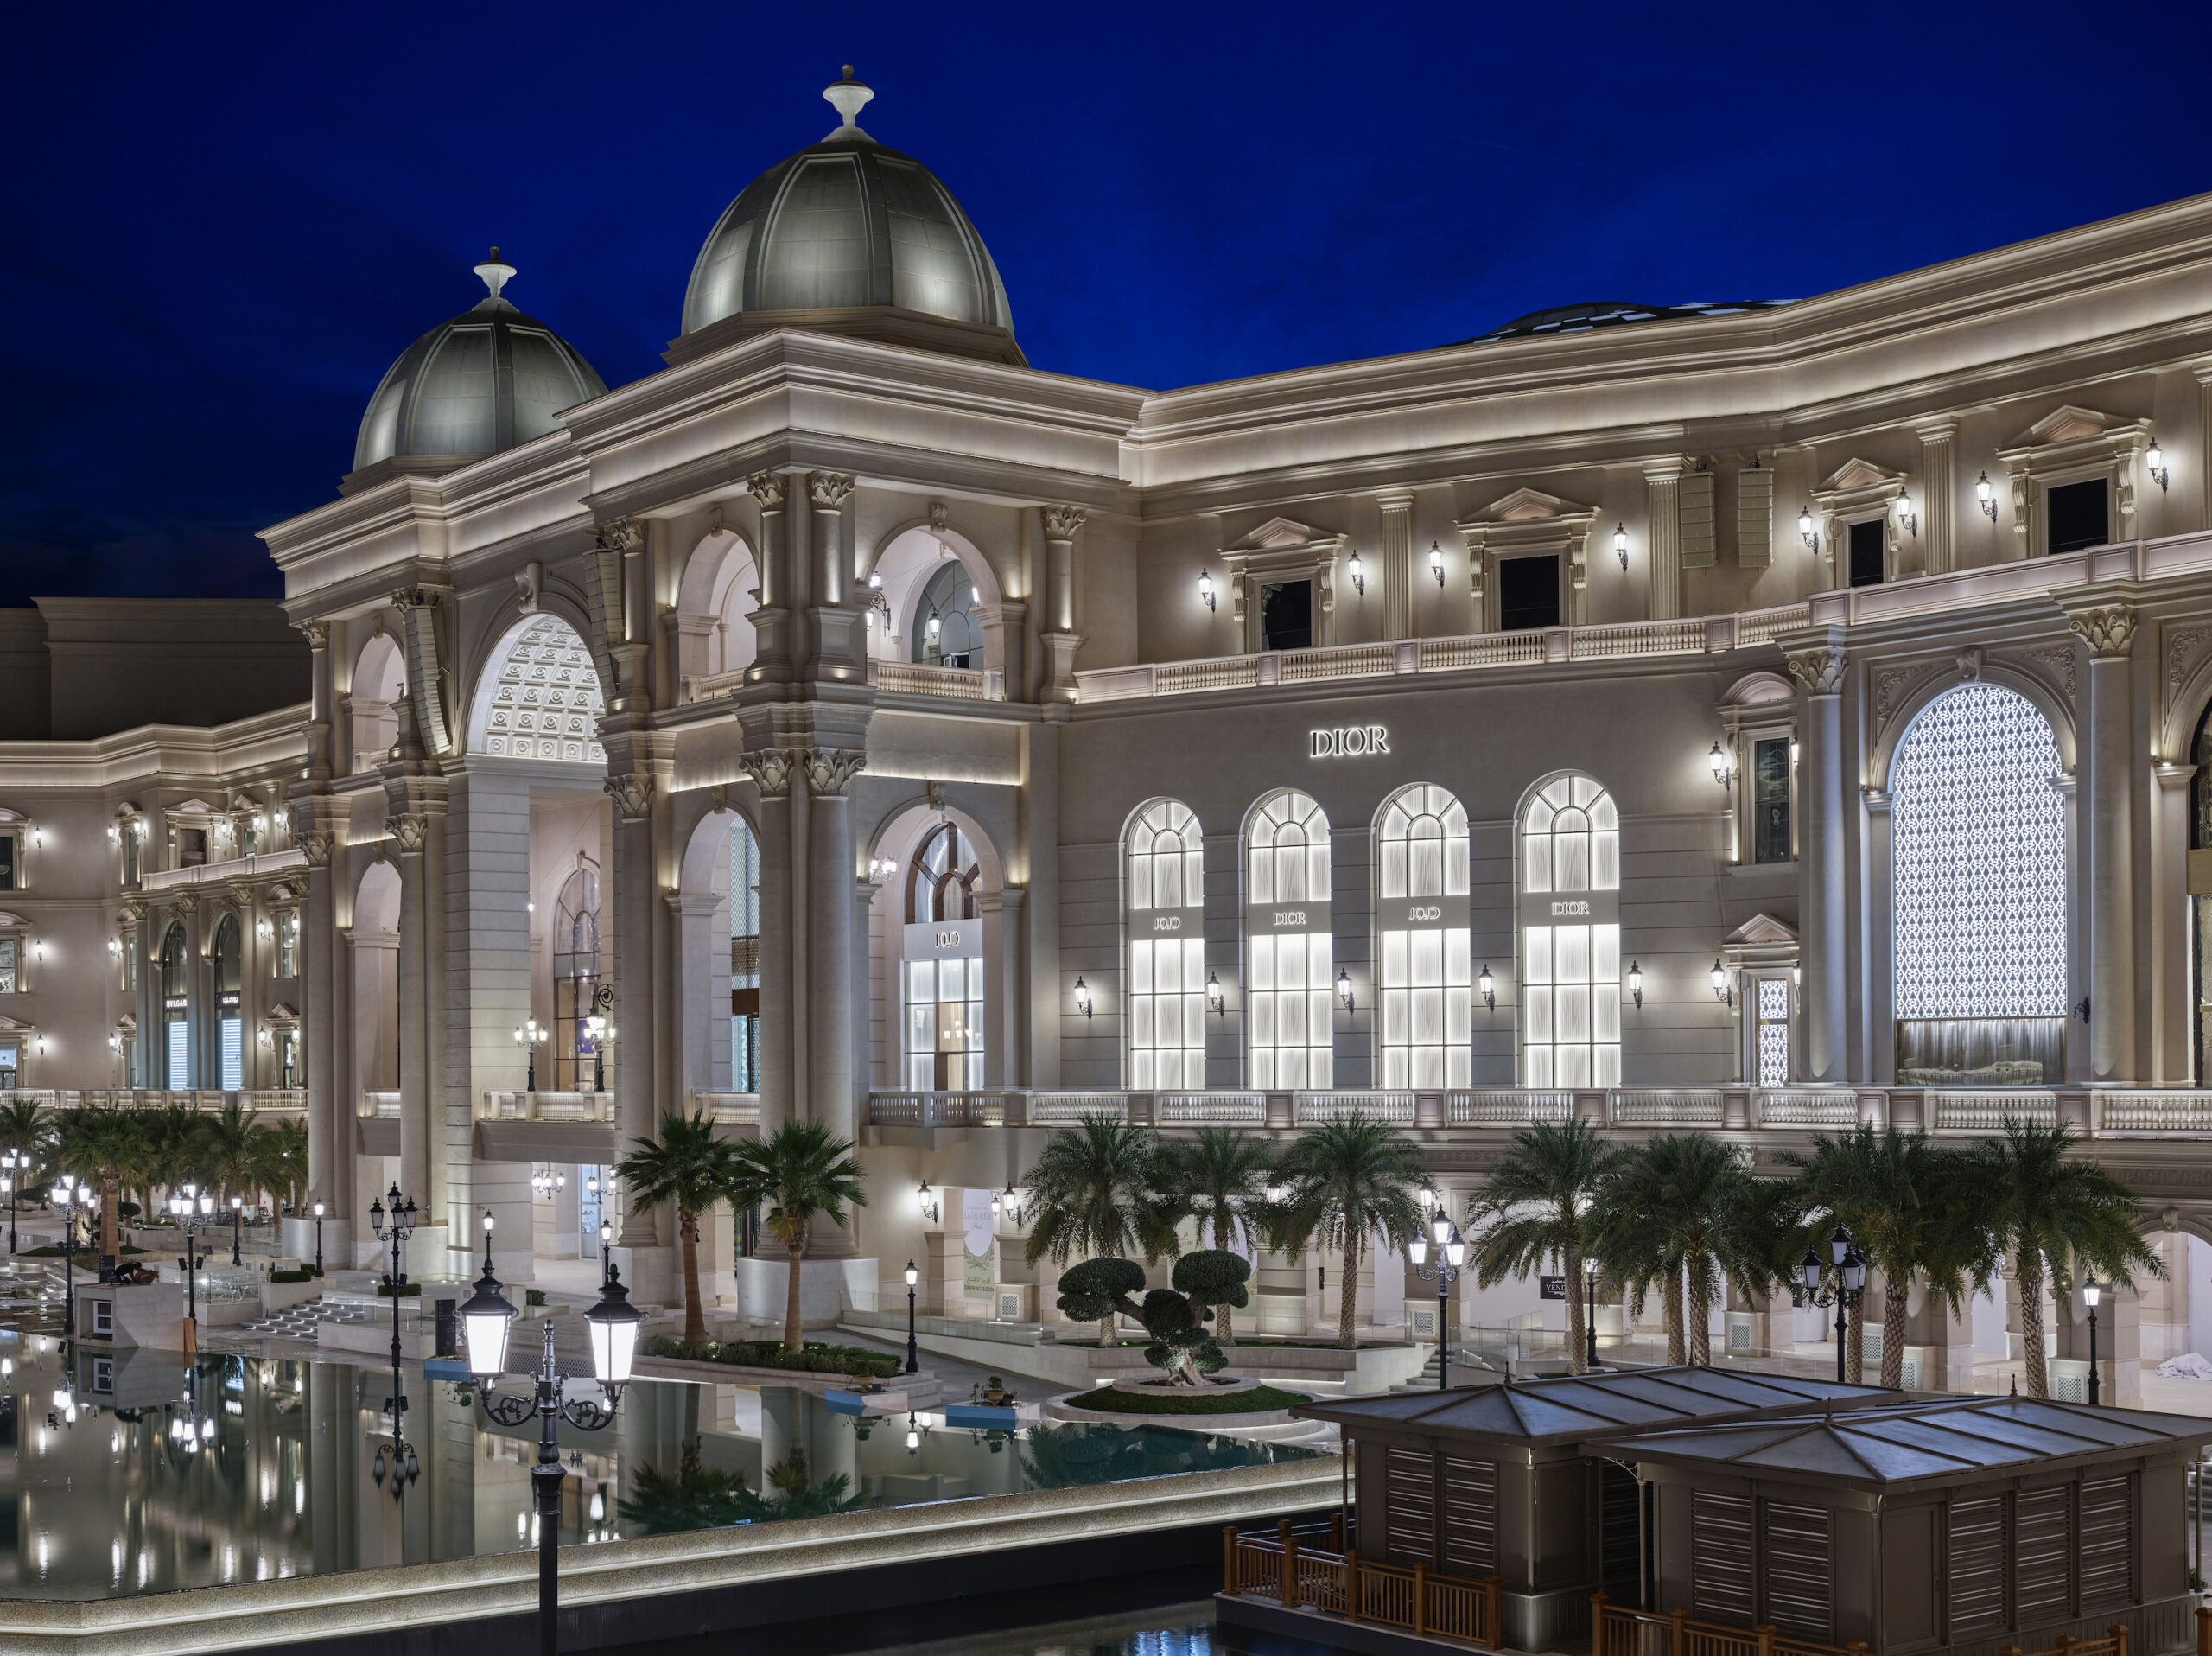 Mall Culture in Qatar - The Place Vendome, Qatar